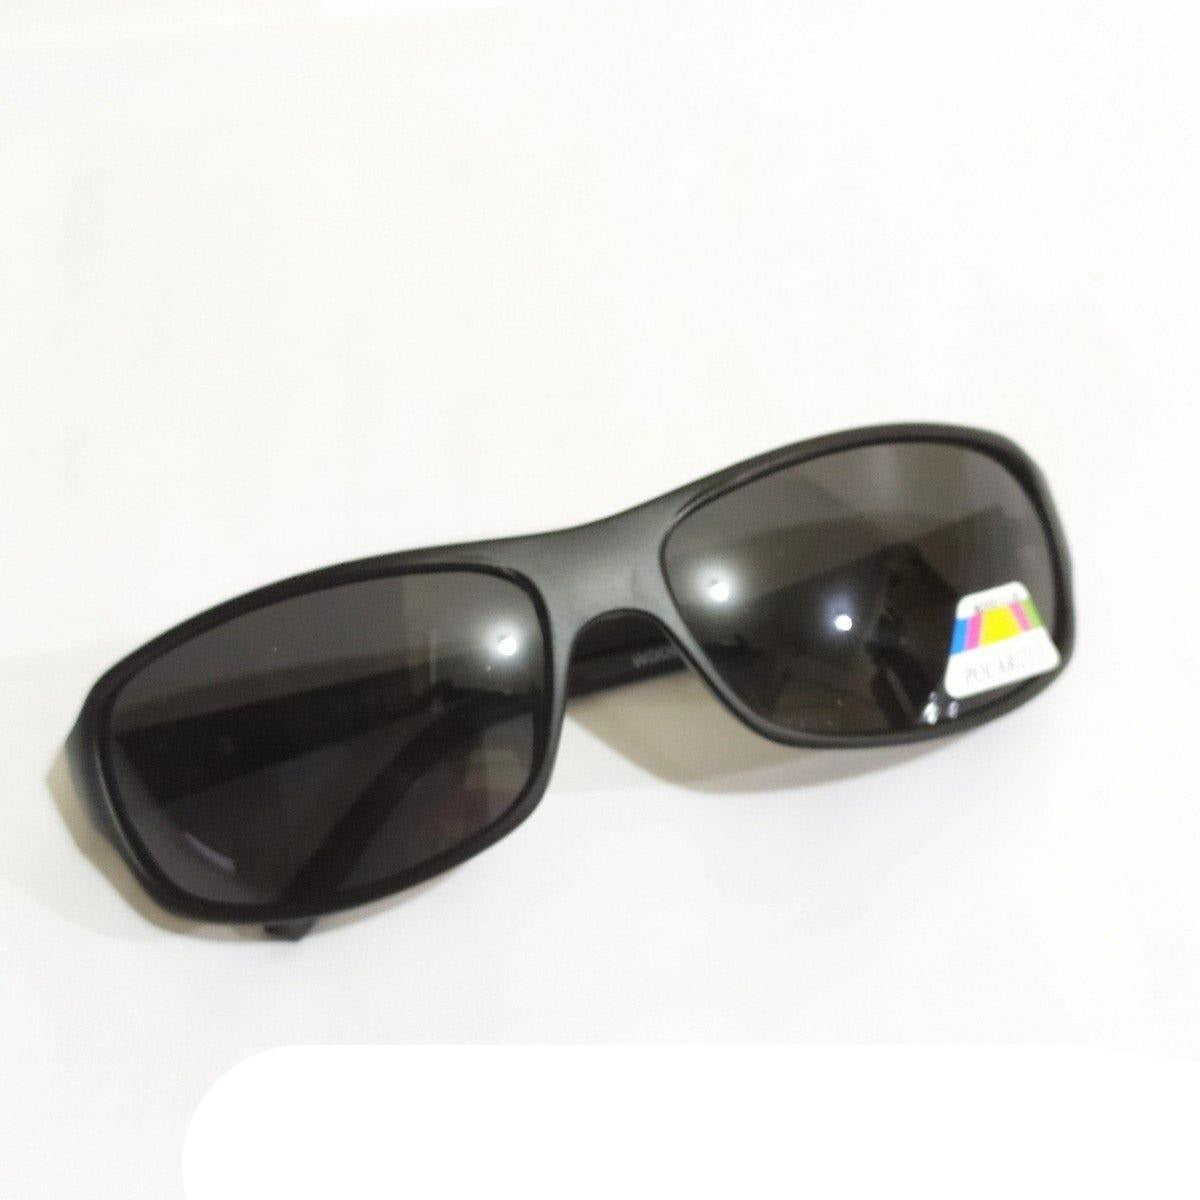 Wraparound Sports Polarized Sunglasses for Men and Women 10068MBK - Glasses India Online